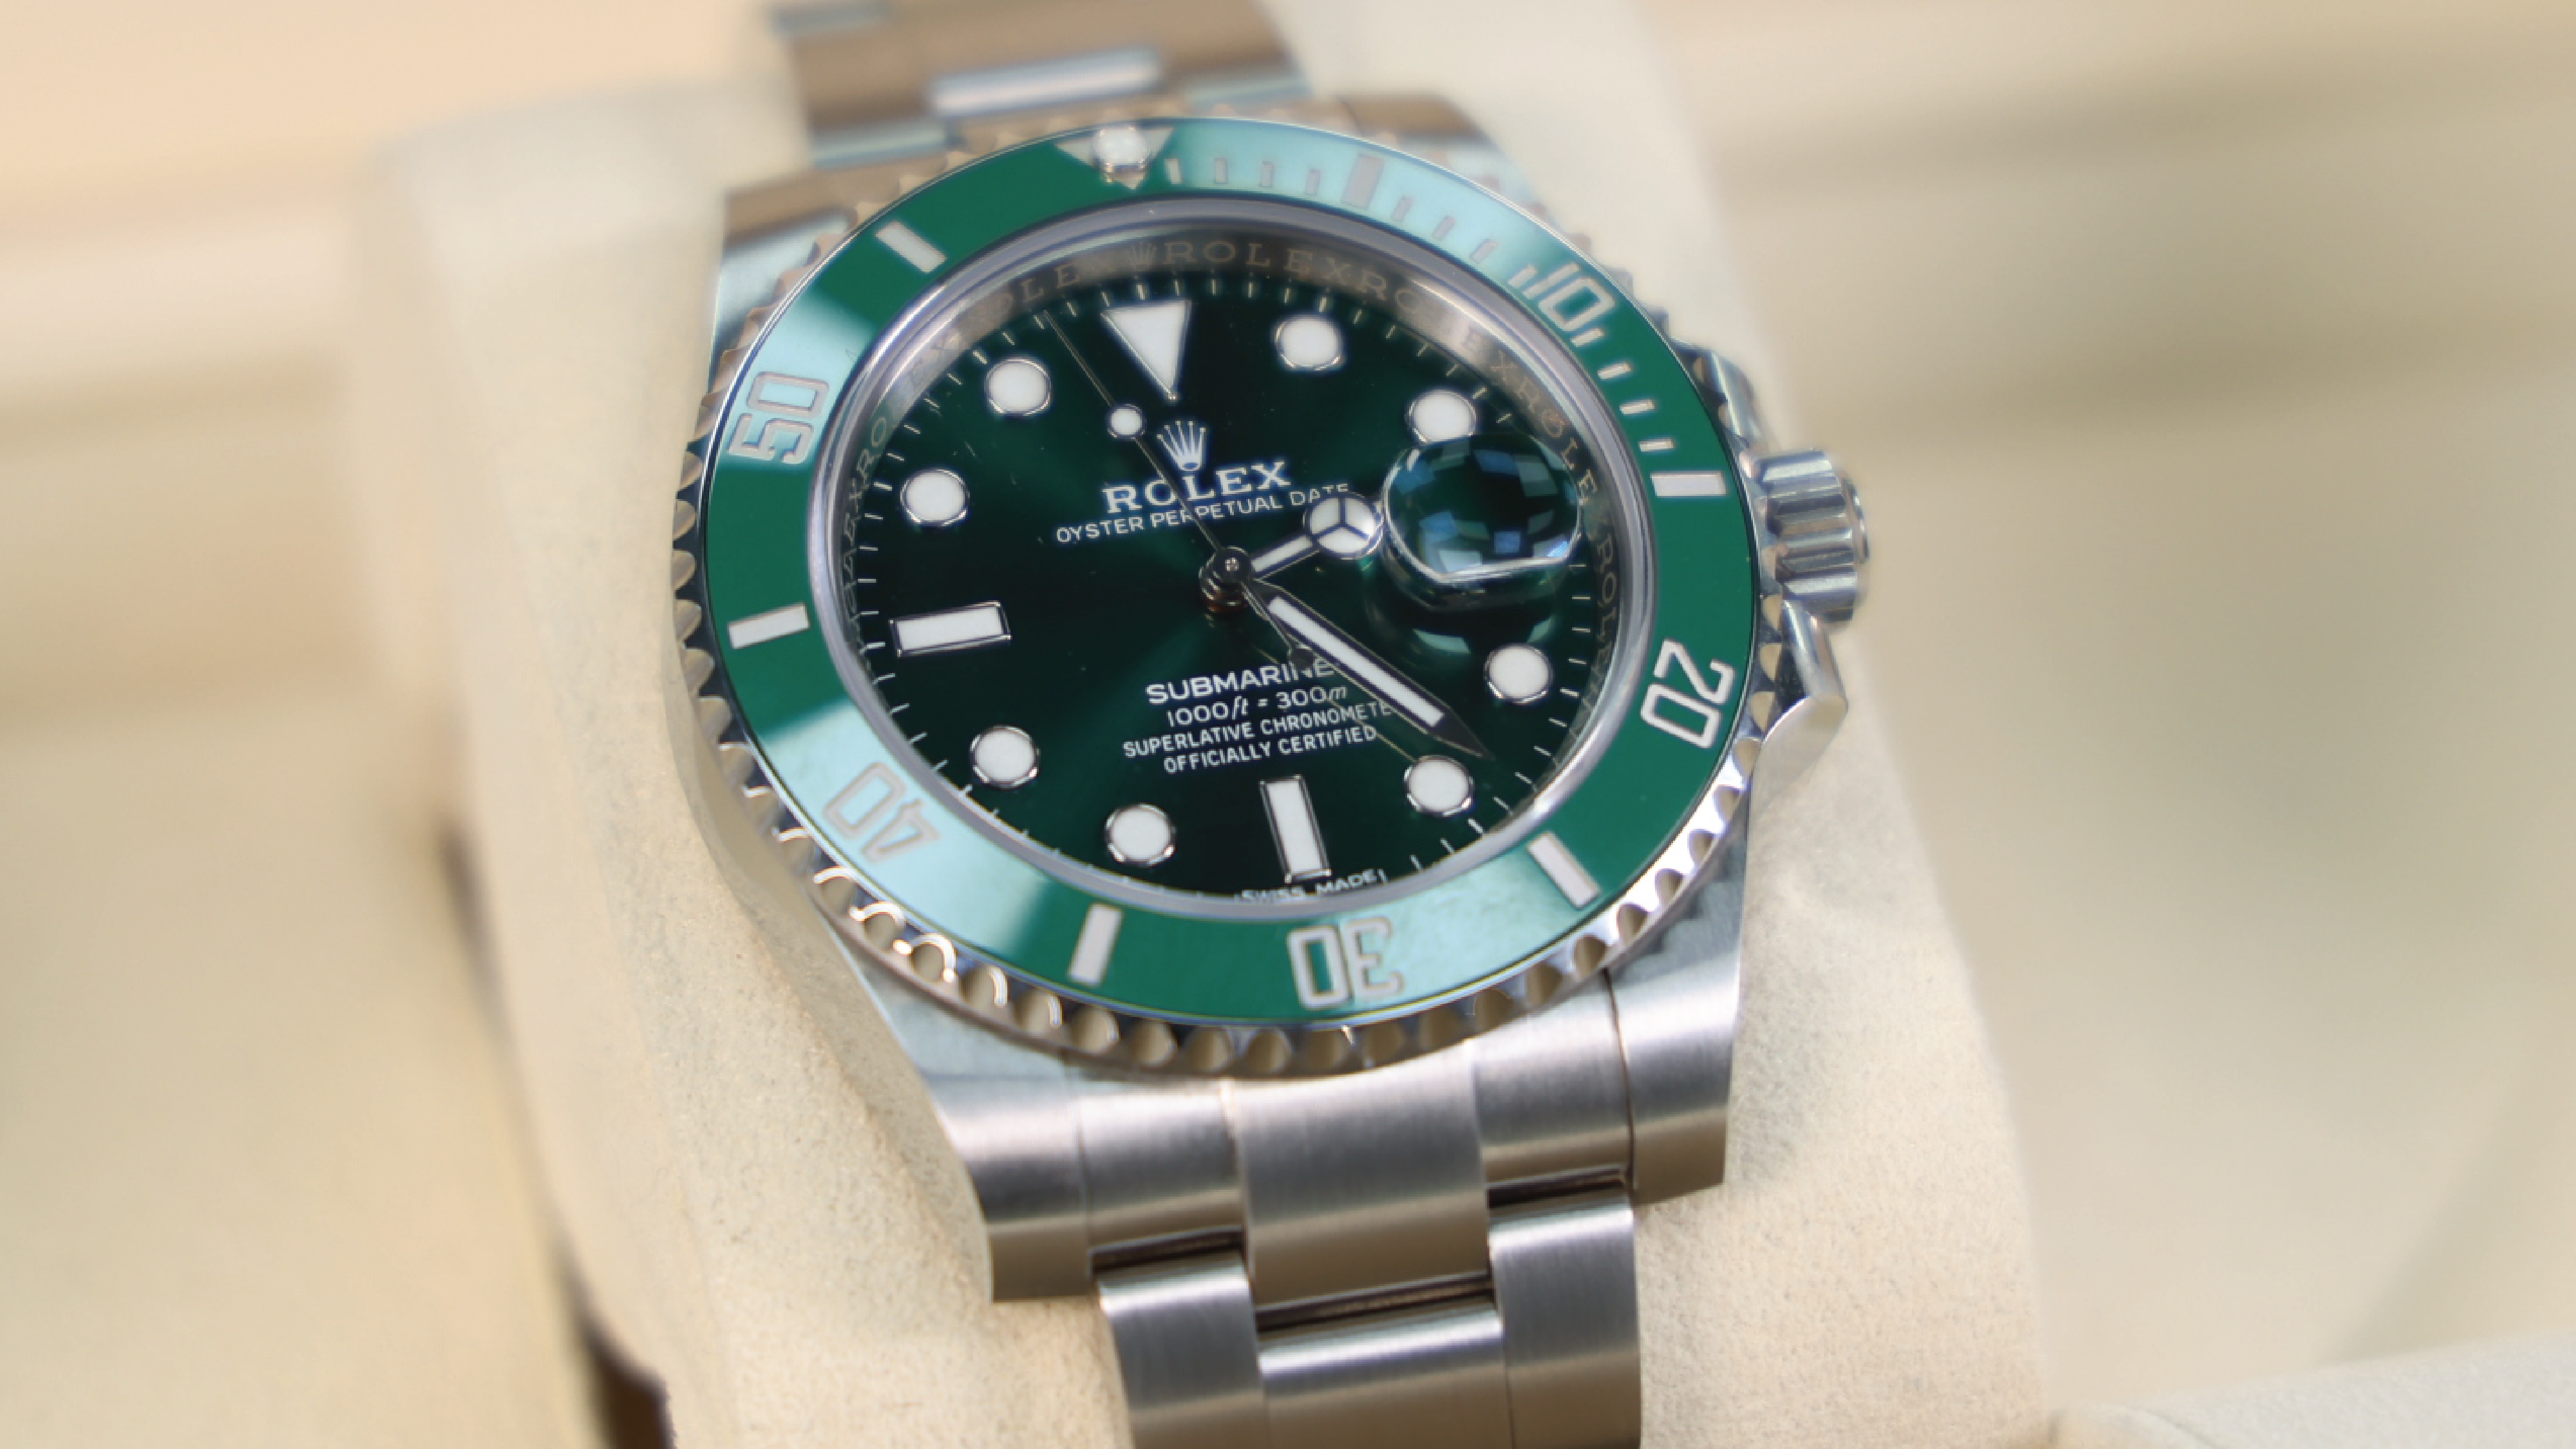 Hulk' Submariner, Ref. 116610LV Stainless steel wristwatch with